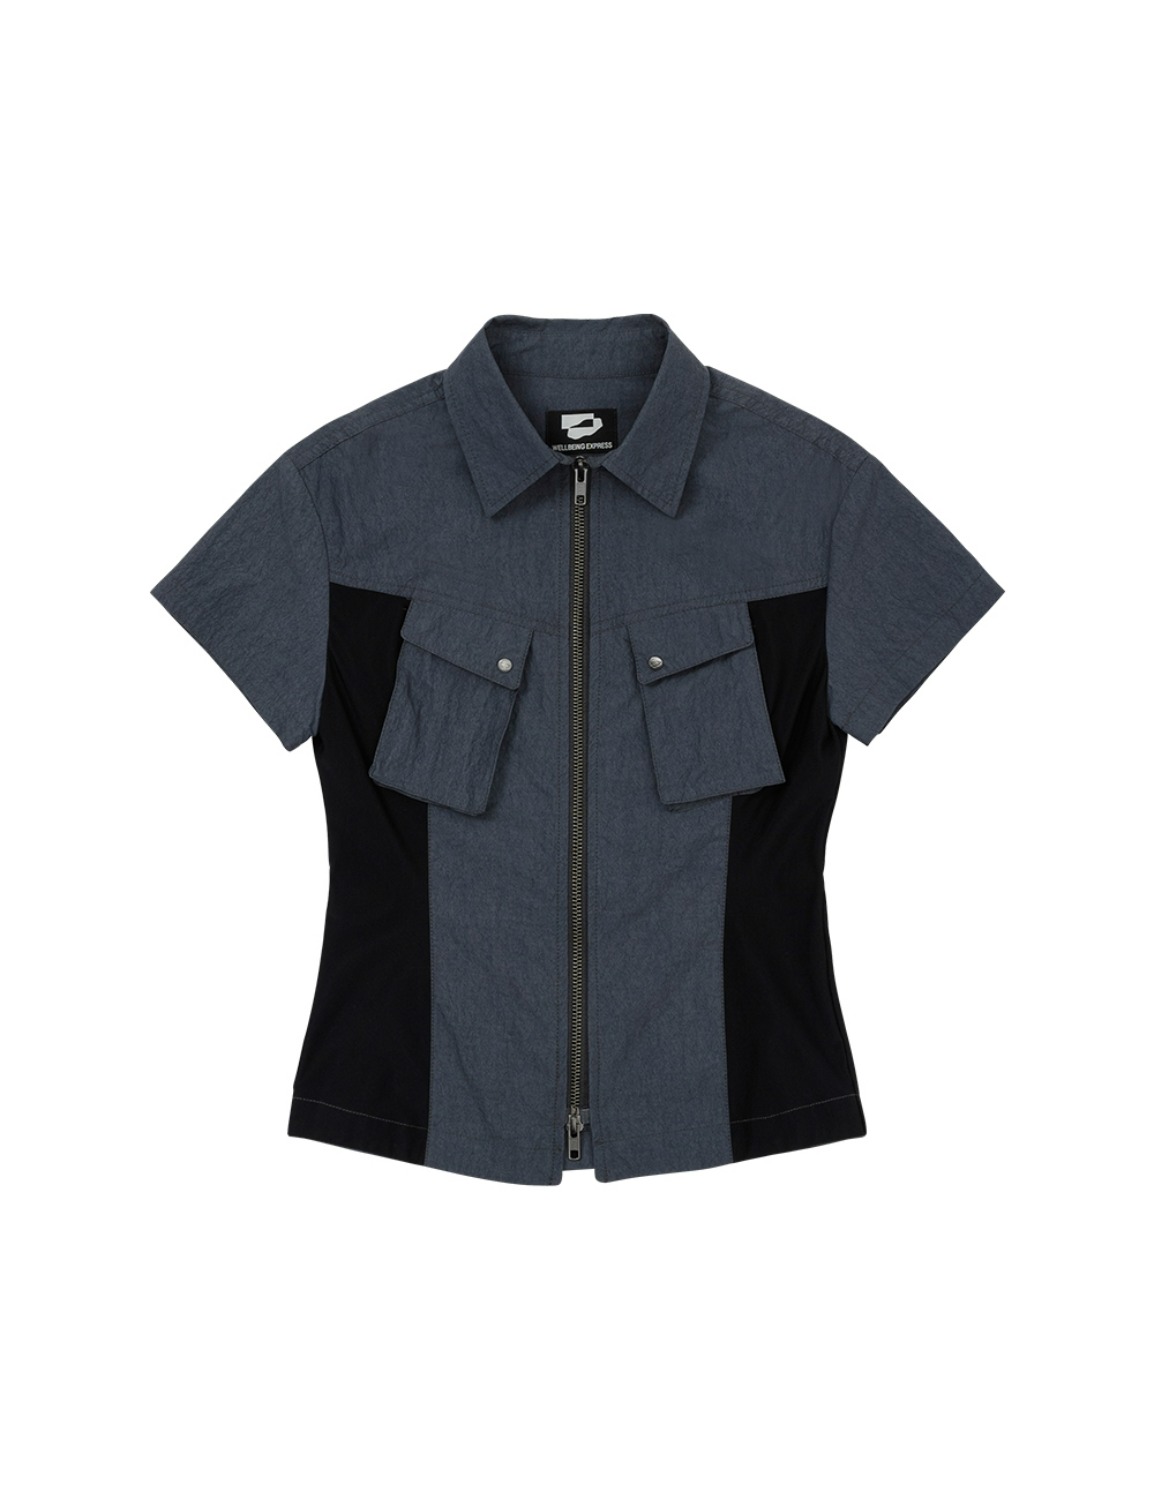 Panelled Zip Up Shirt Navy - WELLBEING EXPRESS